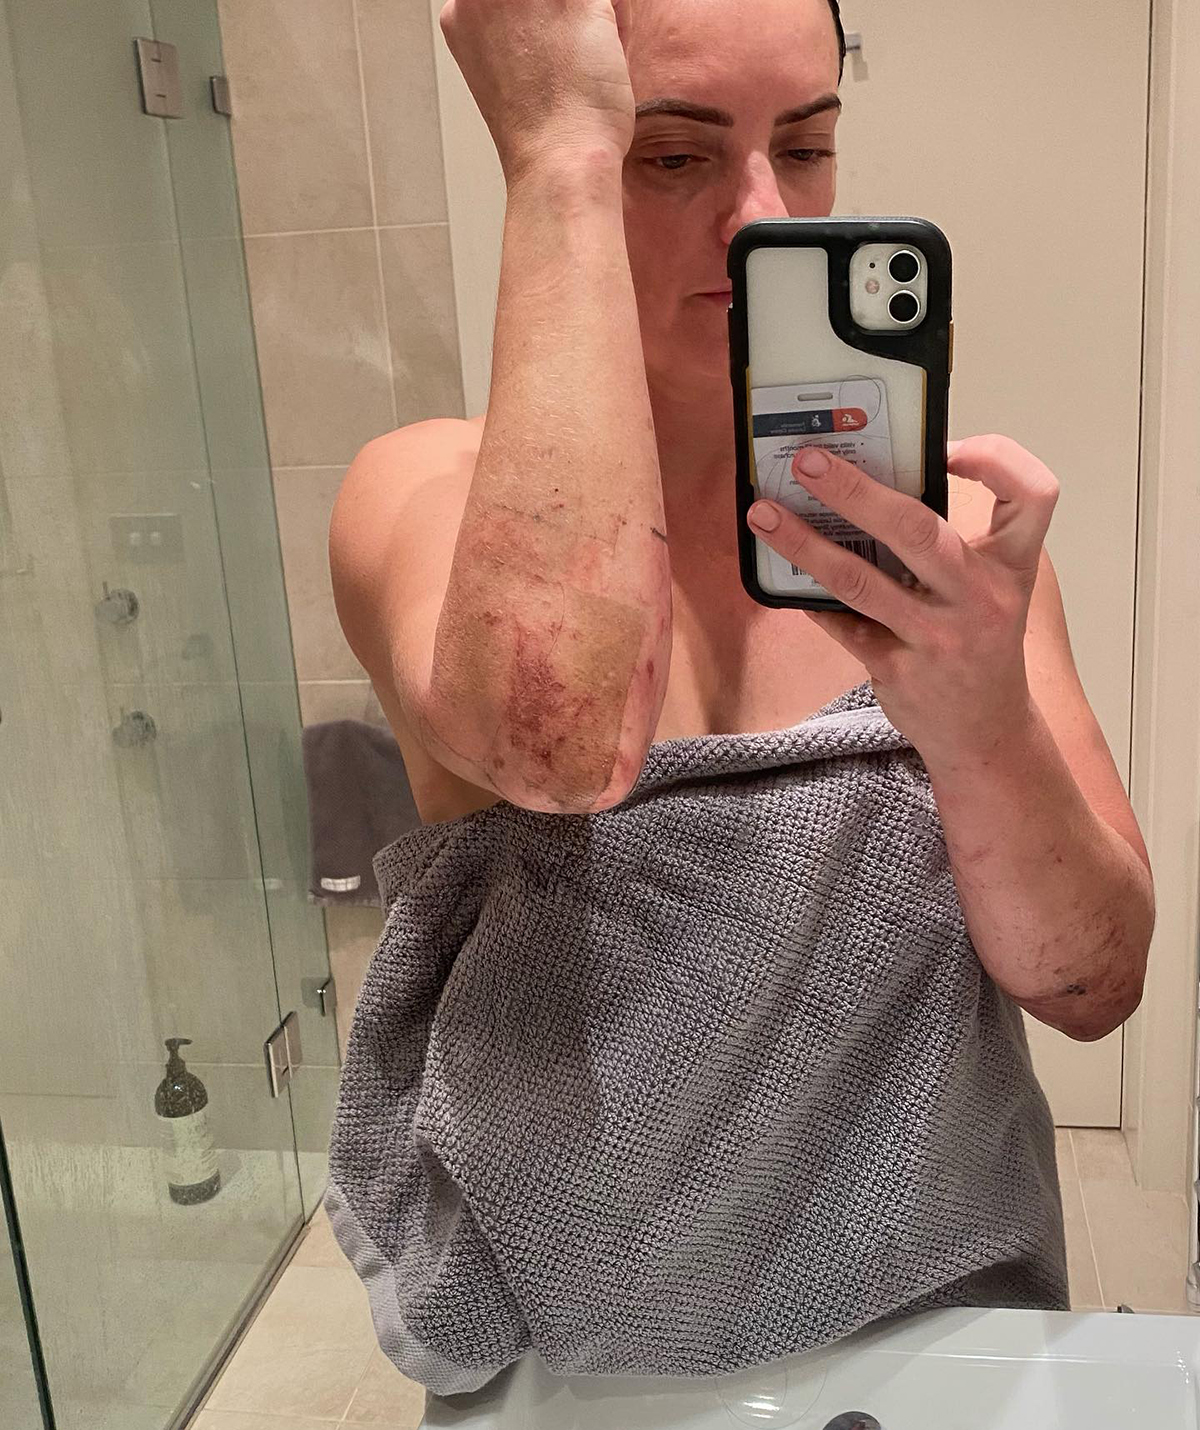 SAS Australia's Simone Holtznagel shows off bruises after show